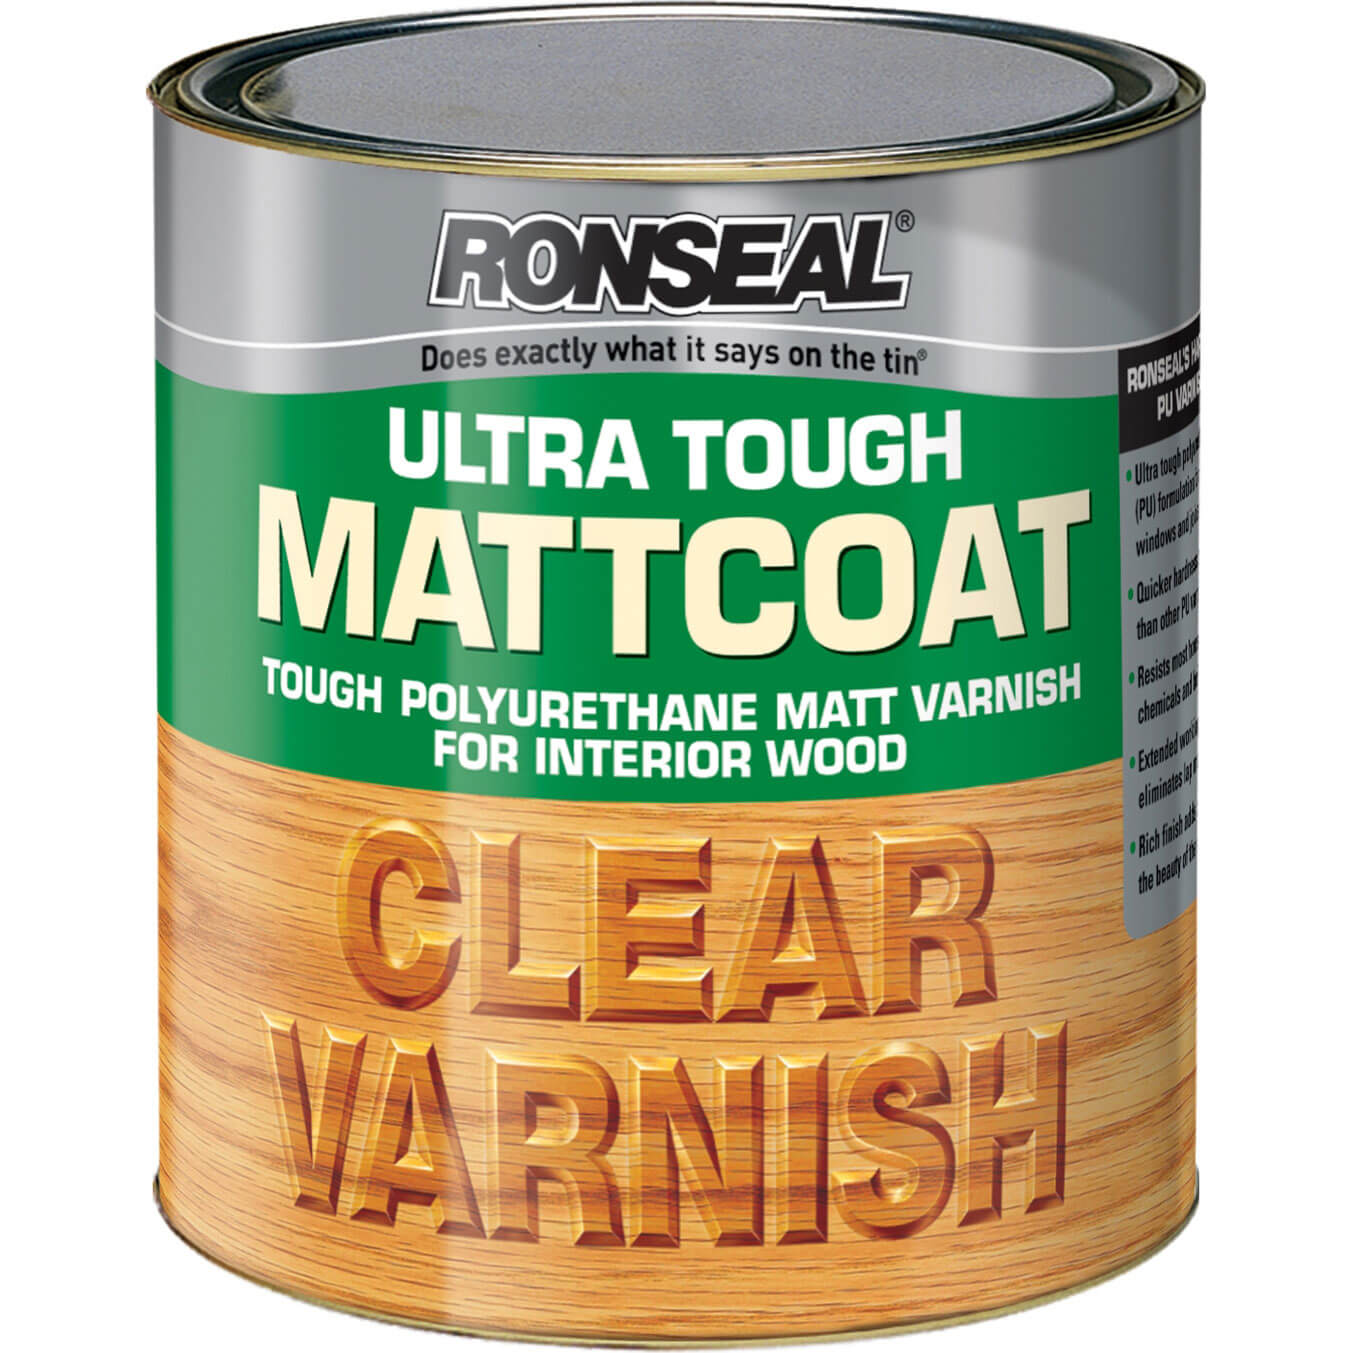 Ronseal Ultra Tough Internal Mattcoat Clear Varnish 2.5 Litre